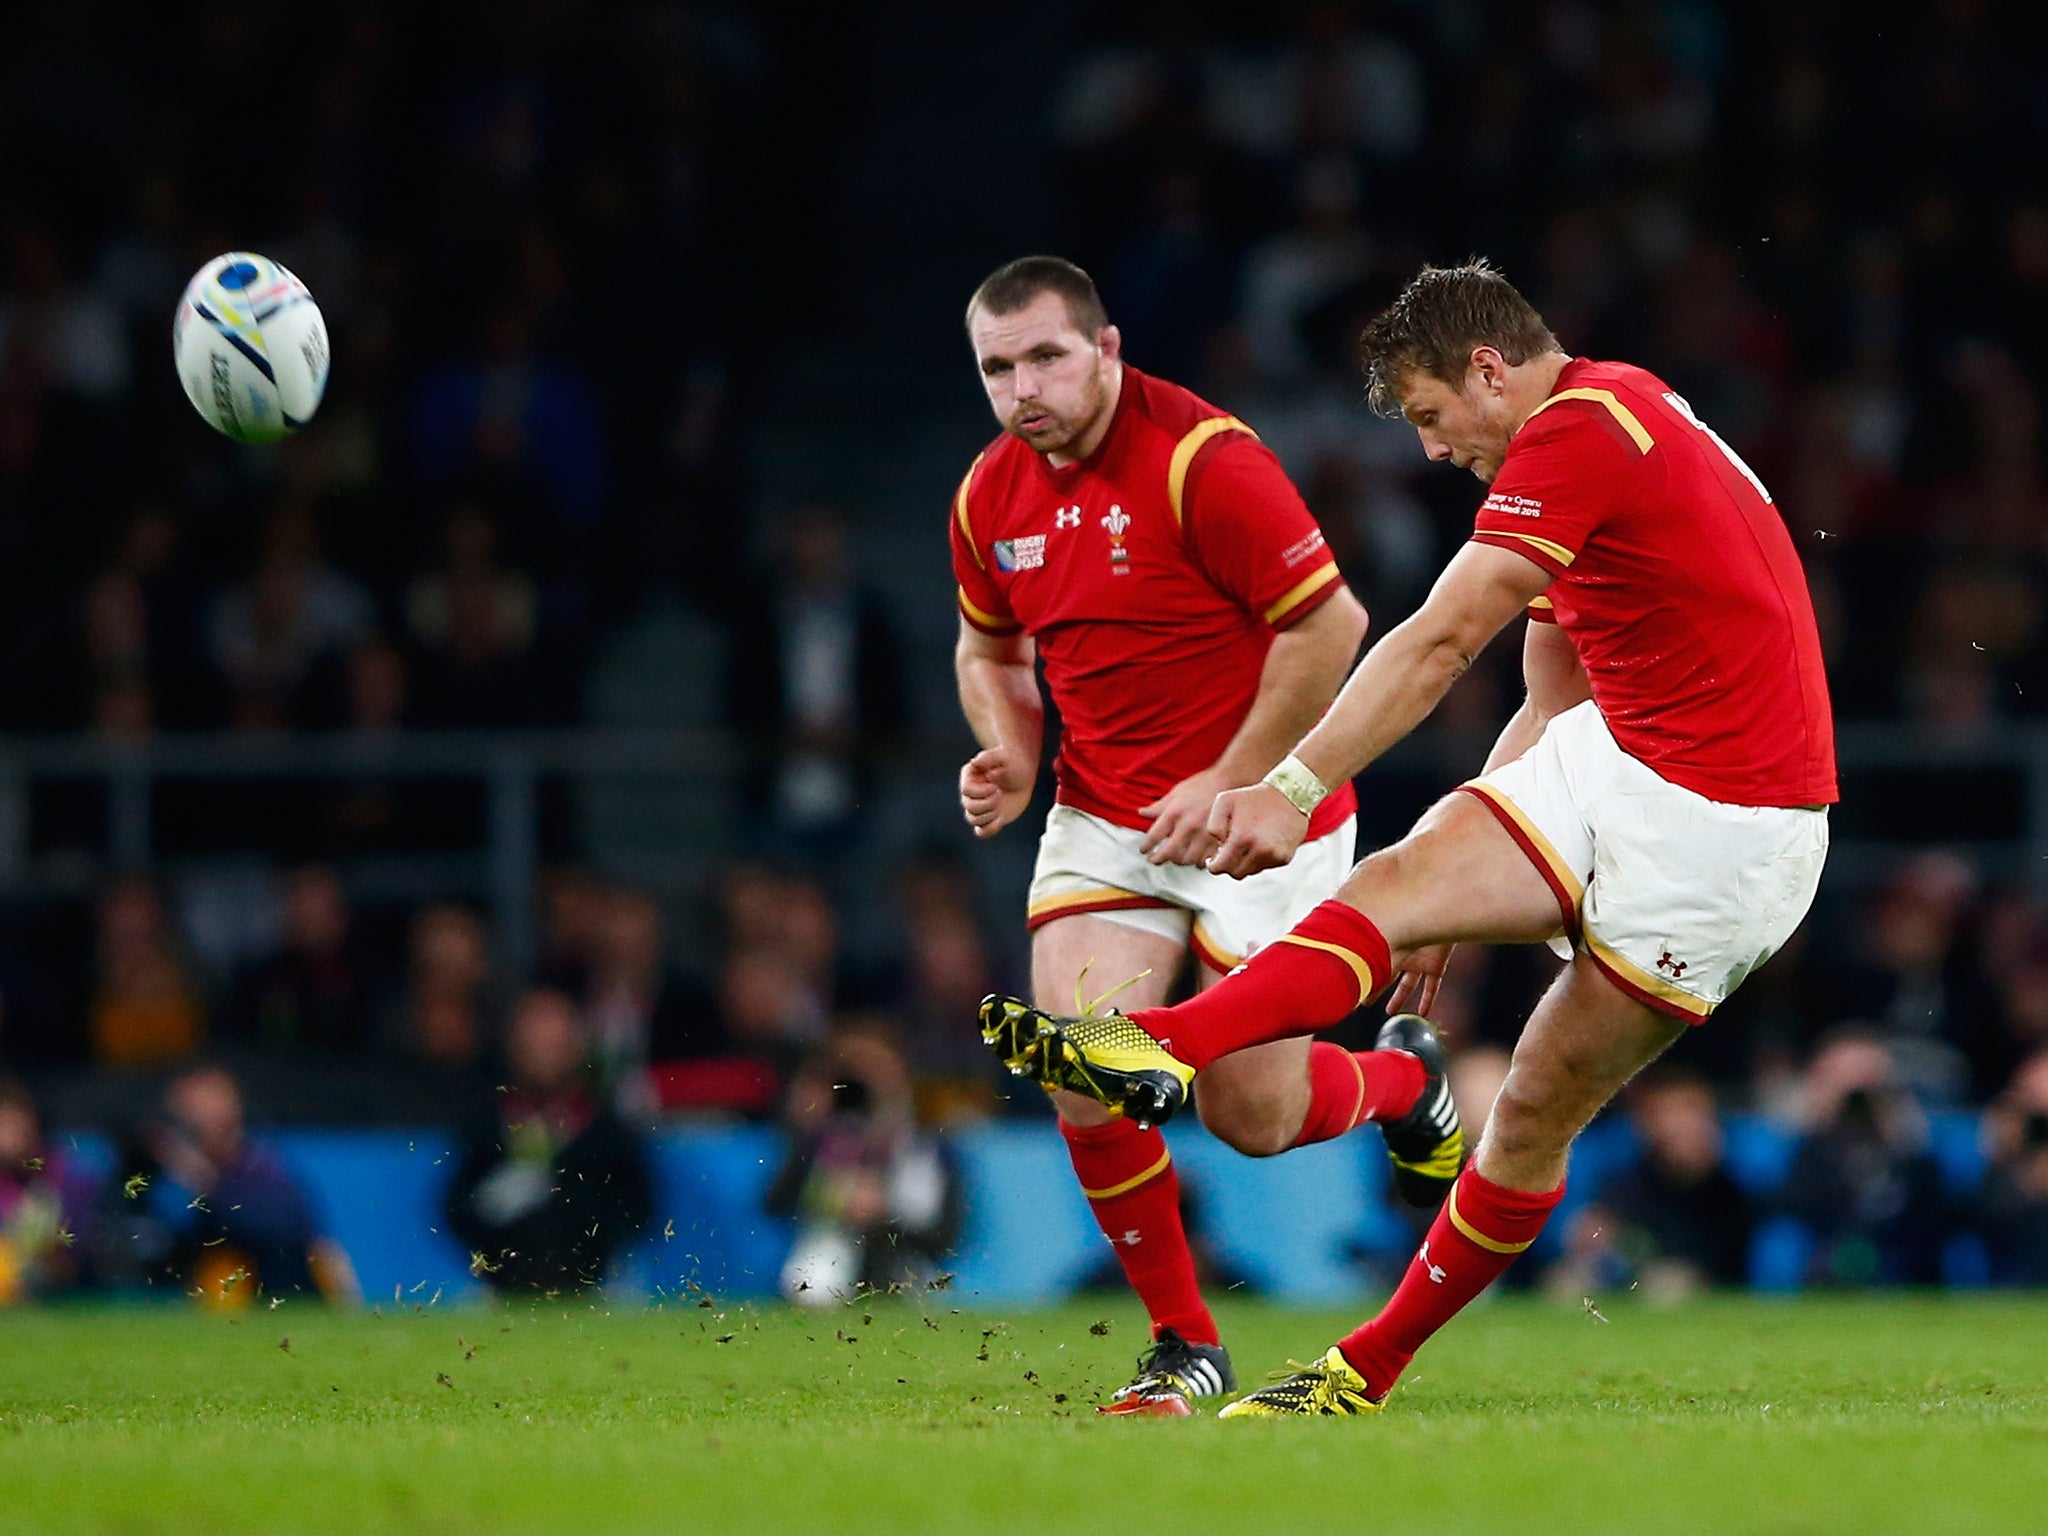 Dan Biggar kicks the winning penalty for Wales ahead of their 28-25 victory over England at Twickenham